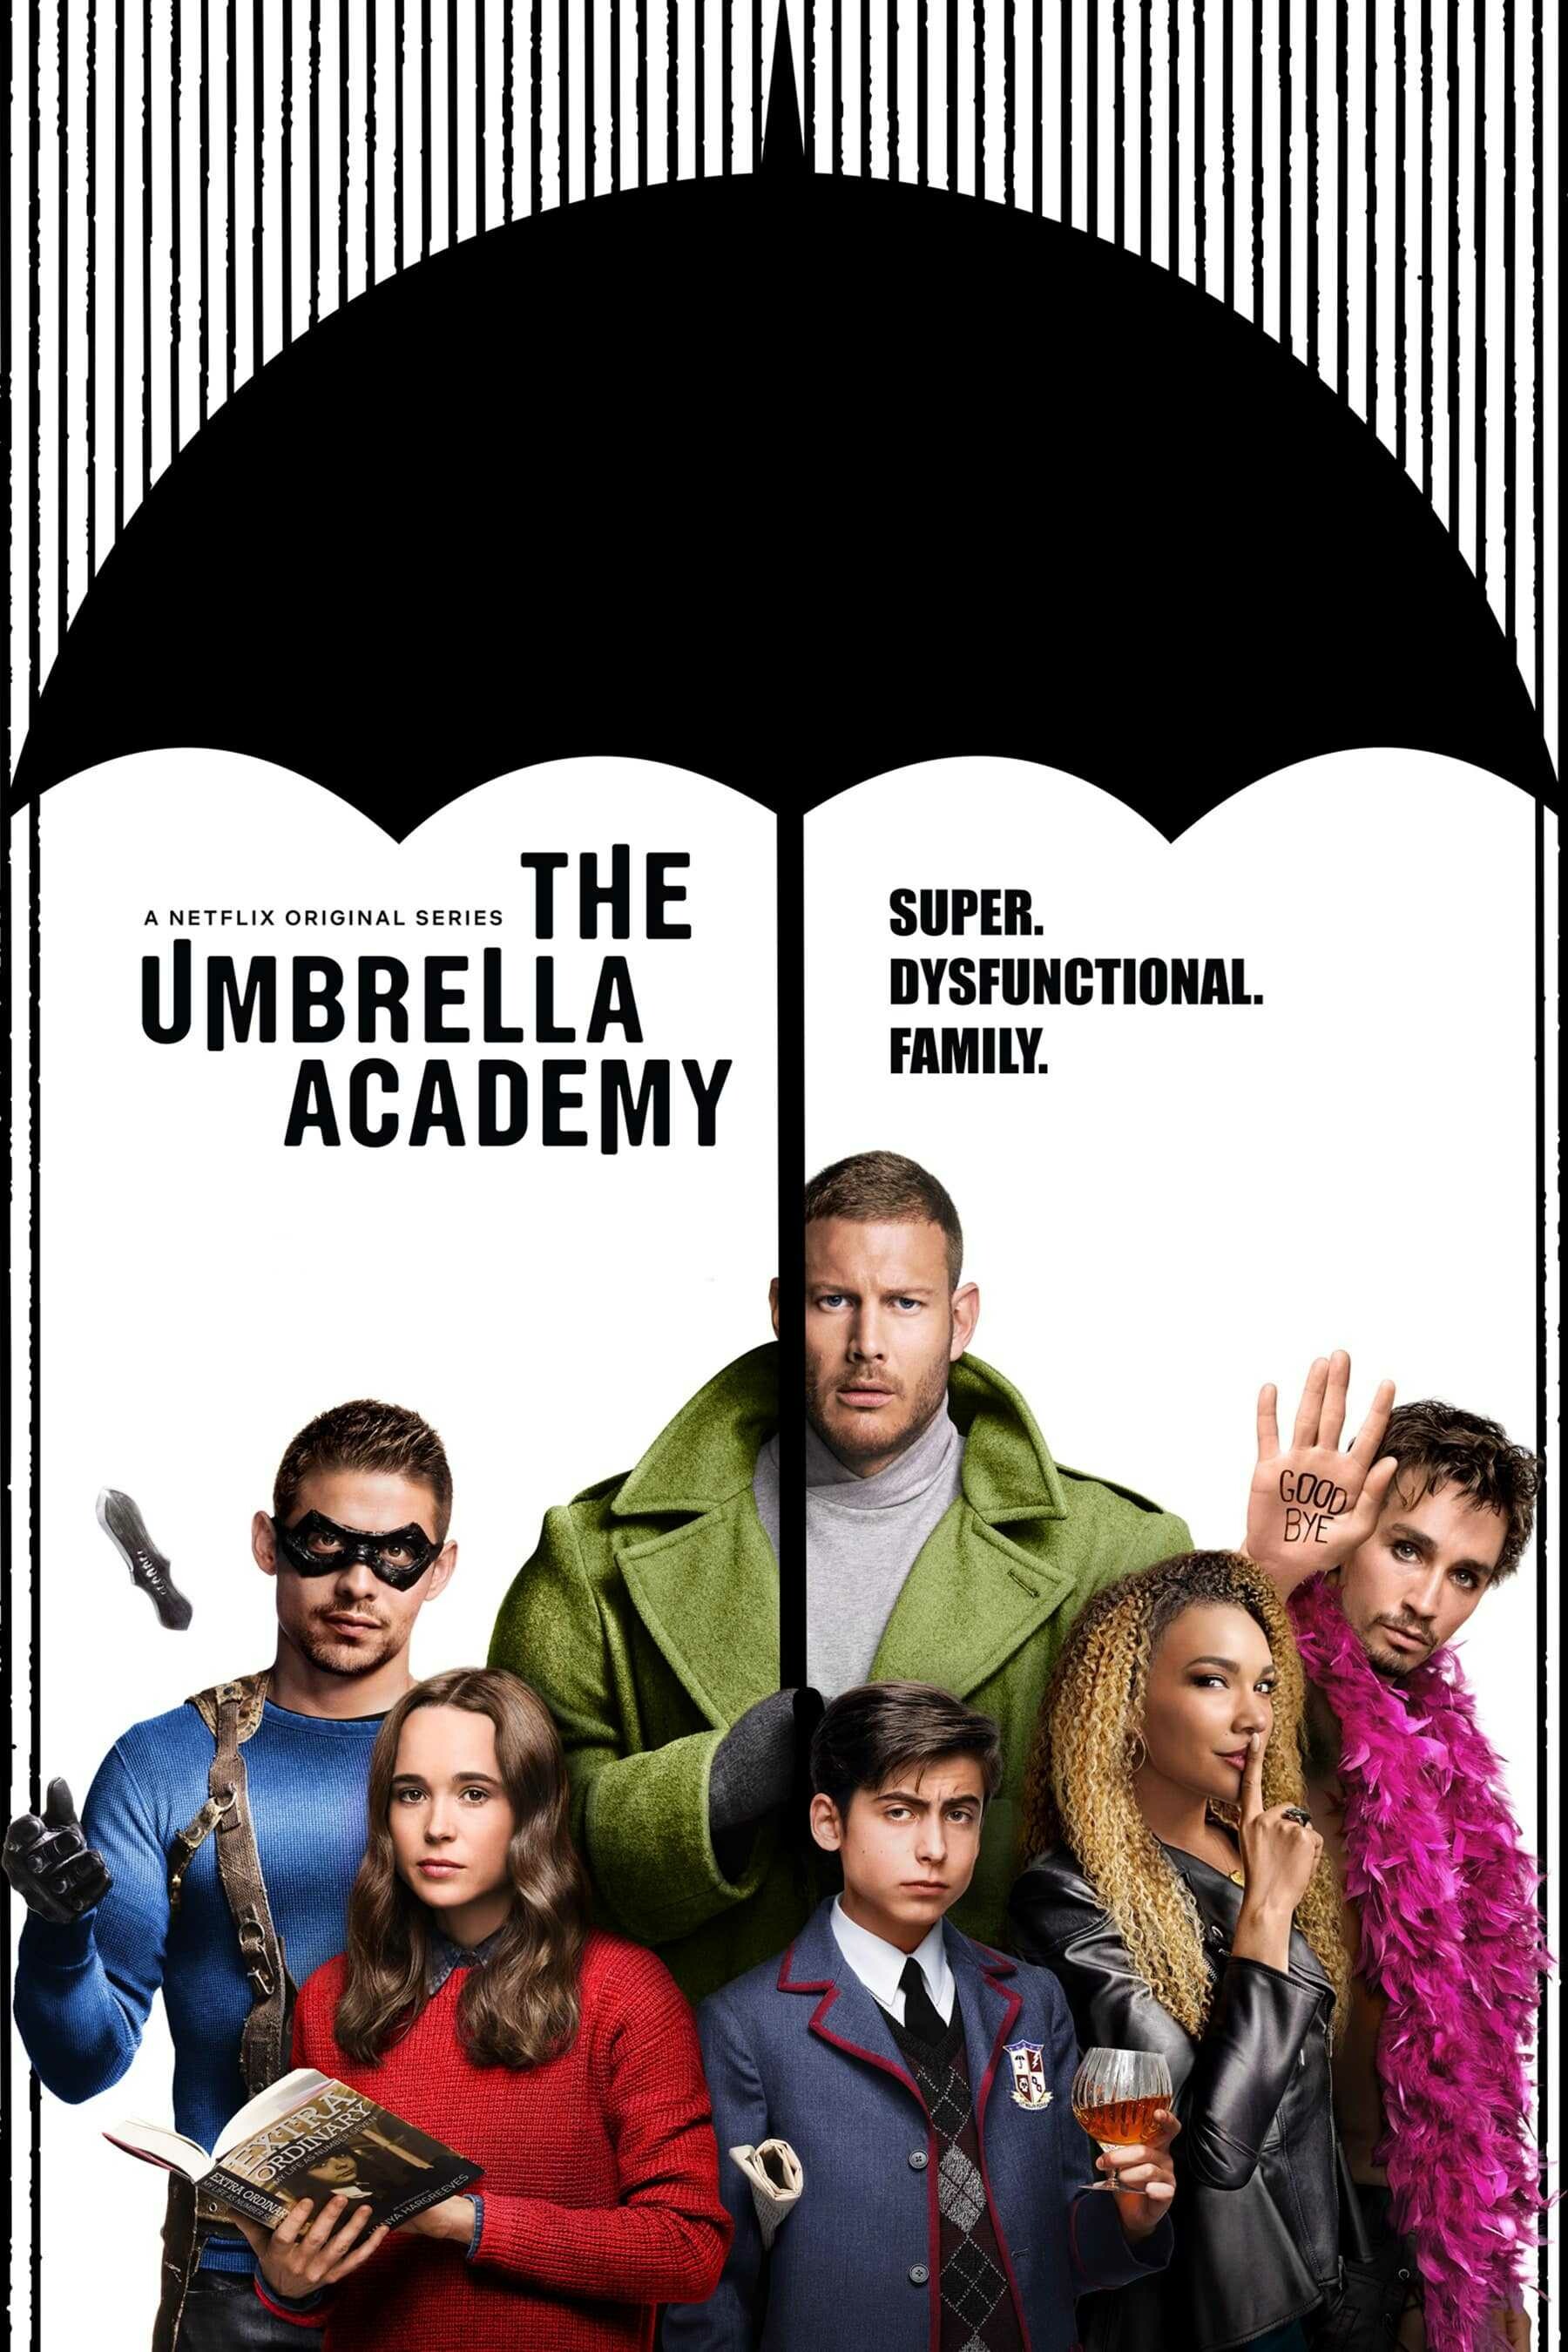 The Umbrella Academy: An American superhero television series, Based on the popular Dark Horse comic. 1800x2700 HD Wallpaper.